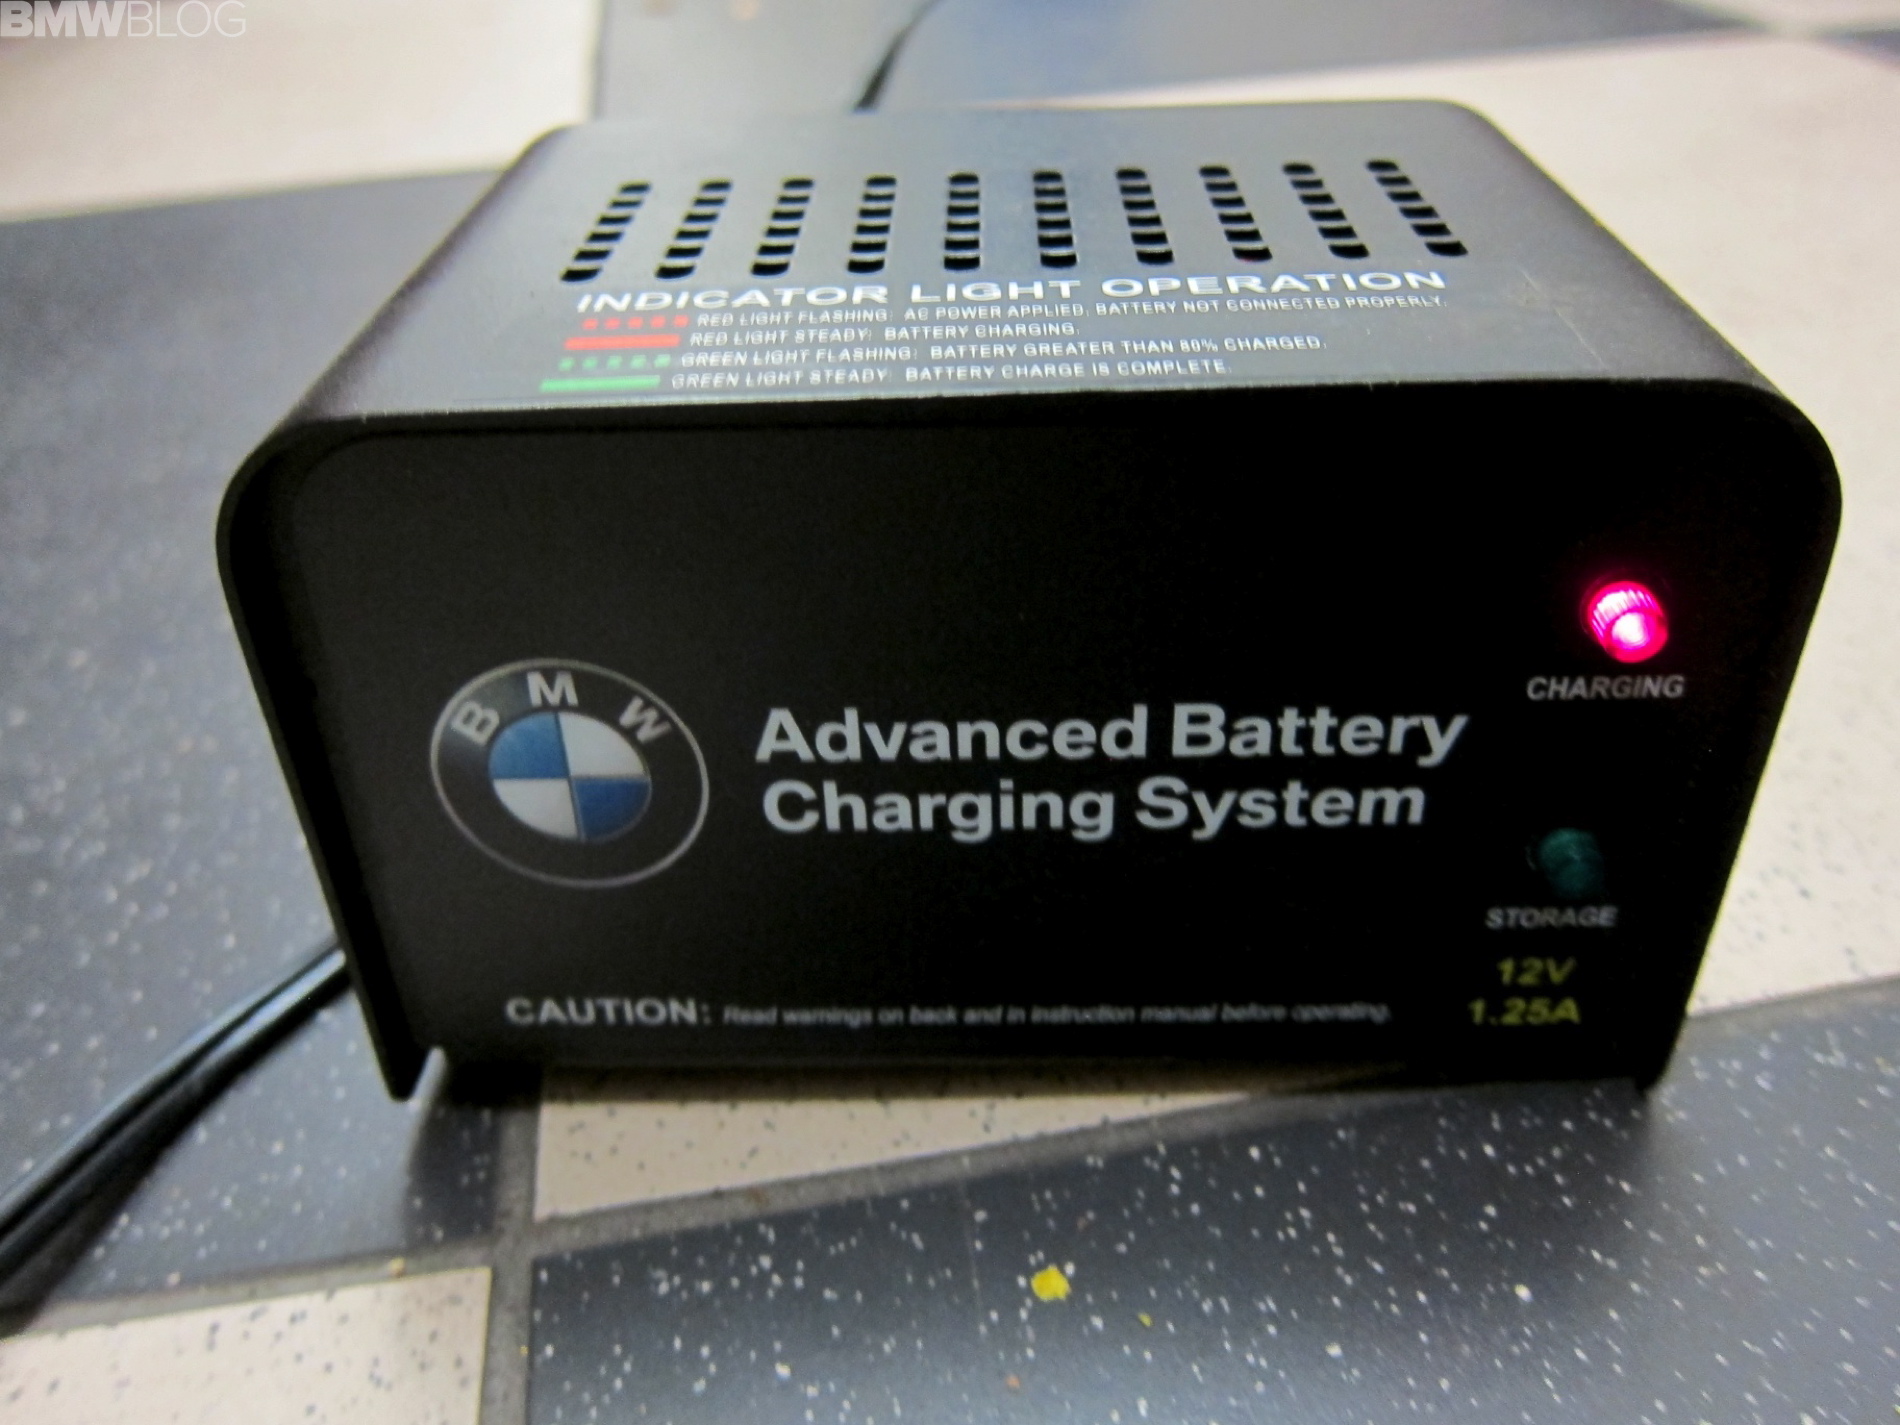 Bmw advanced charging system manual